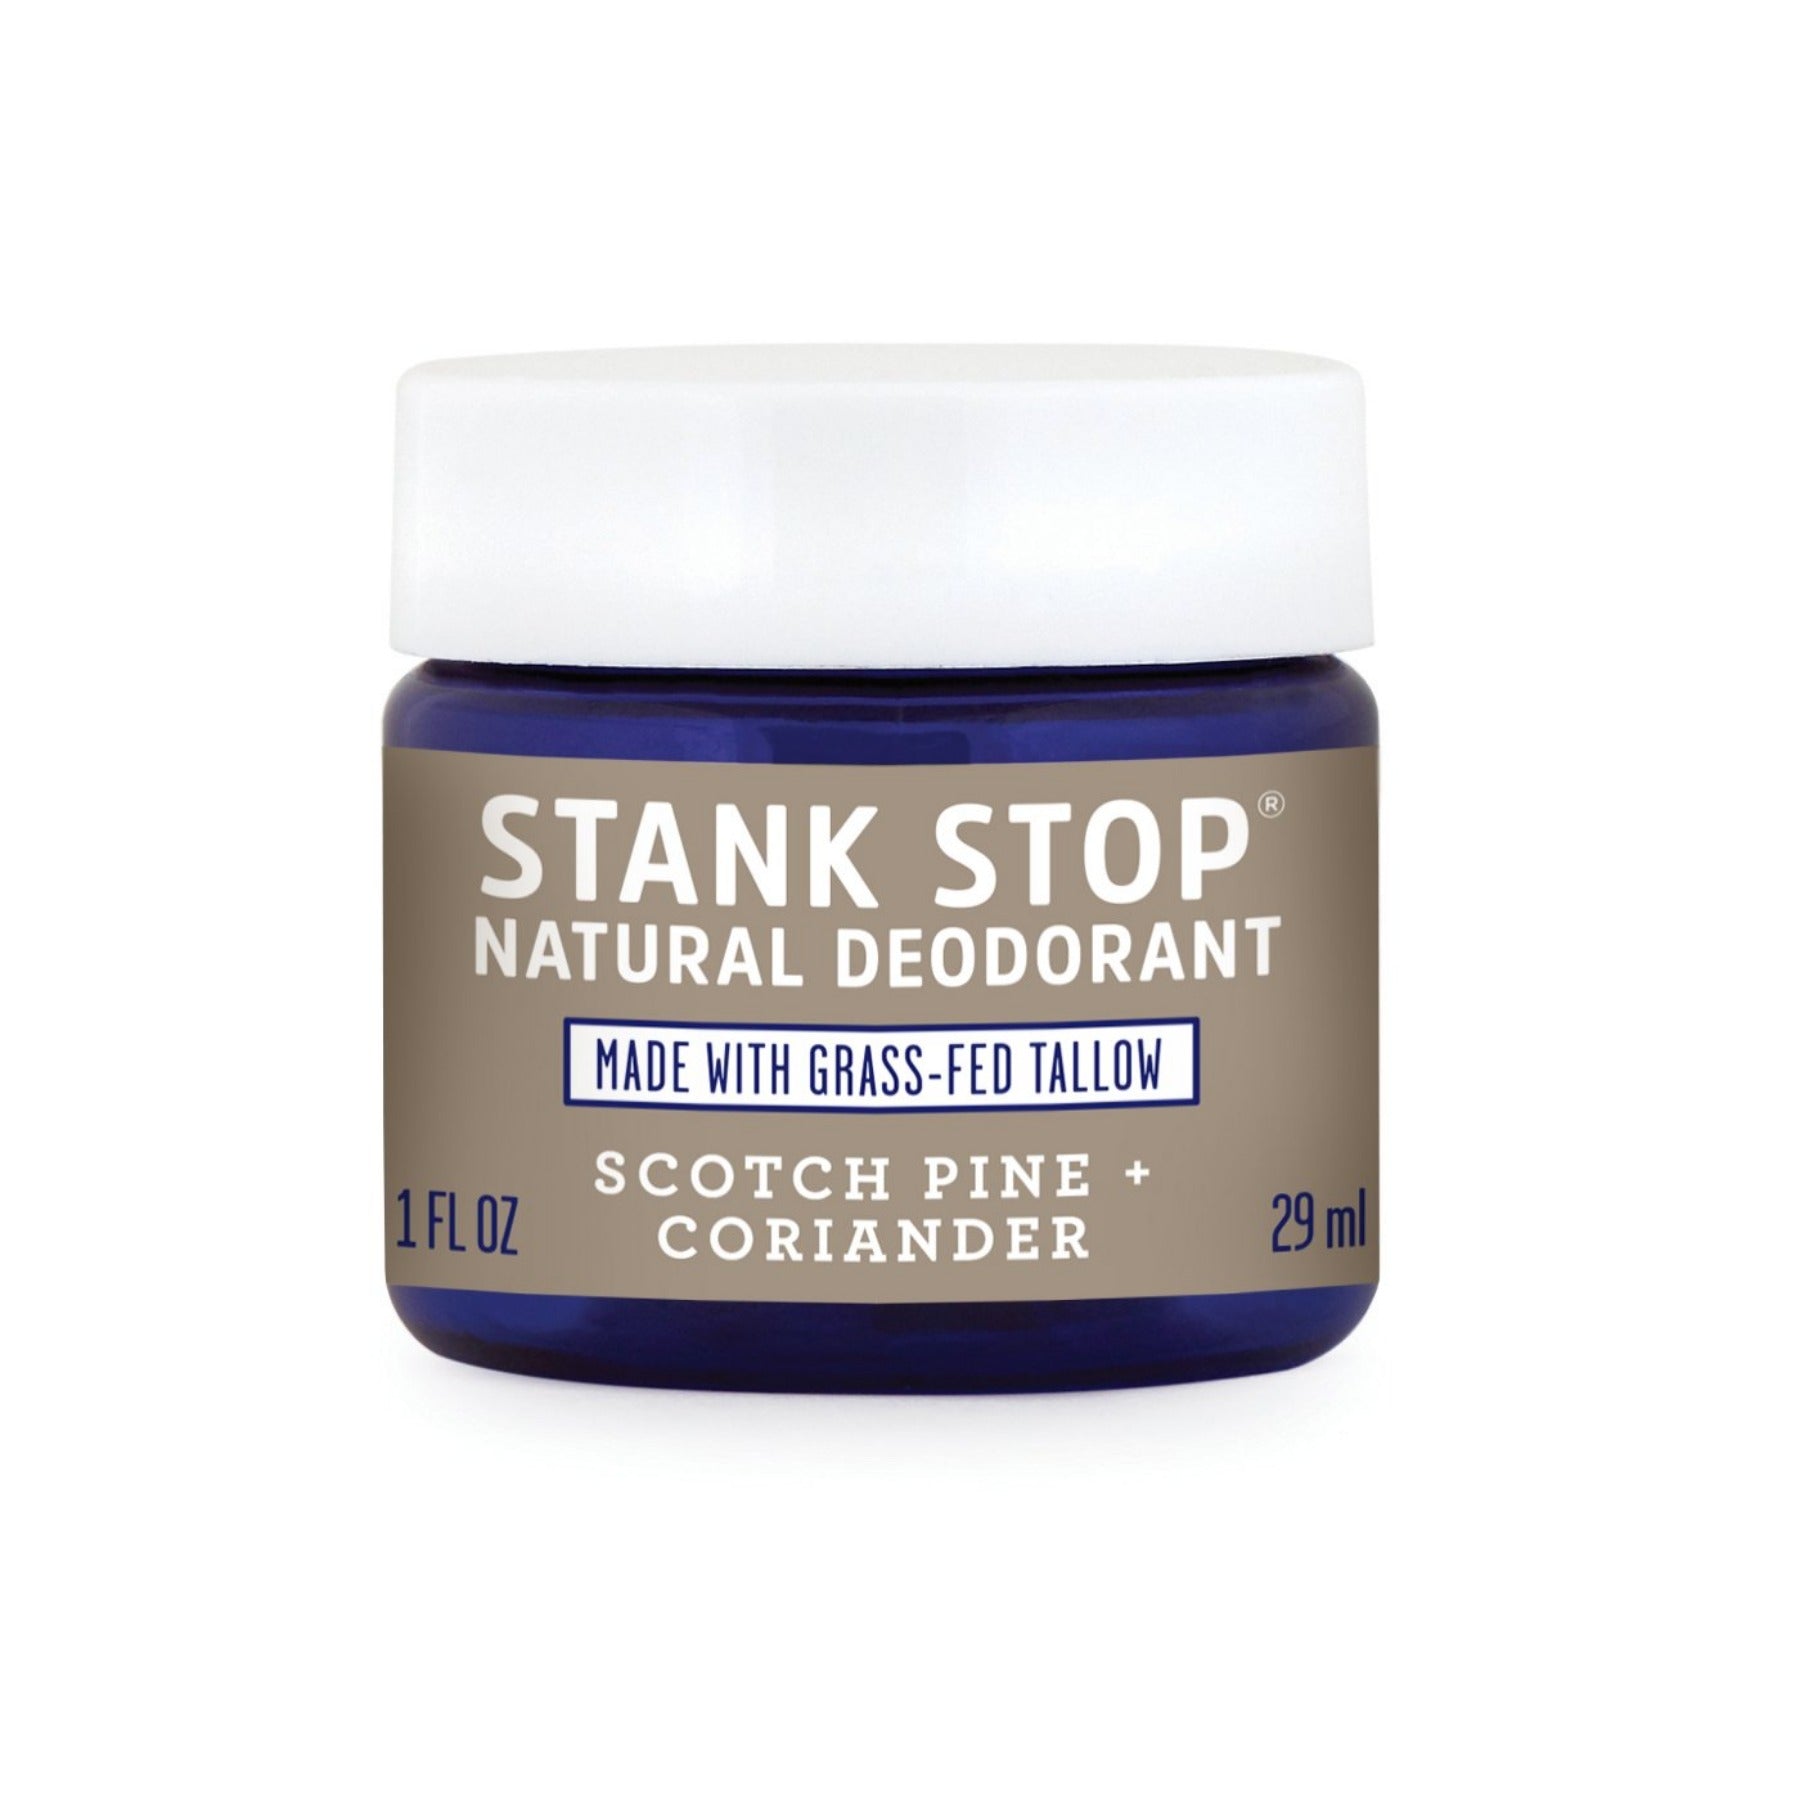 Stank Stop Cream Deodorant Scotch Pine + Coriander 1oz by FATCO Skincare Products